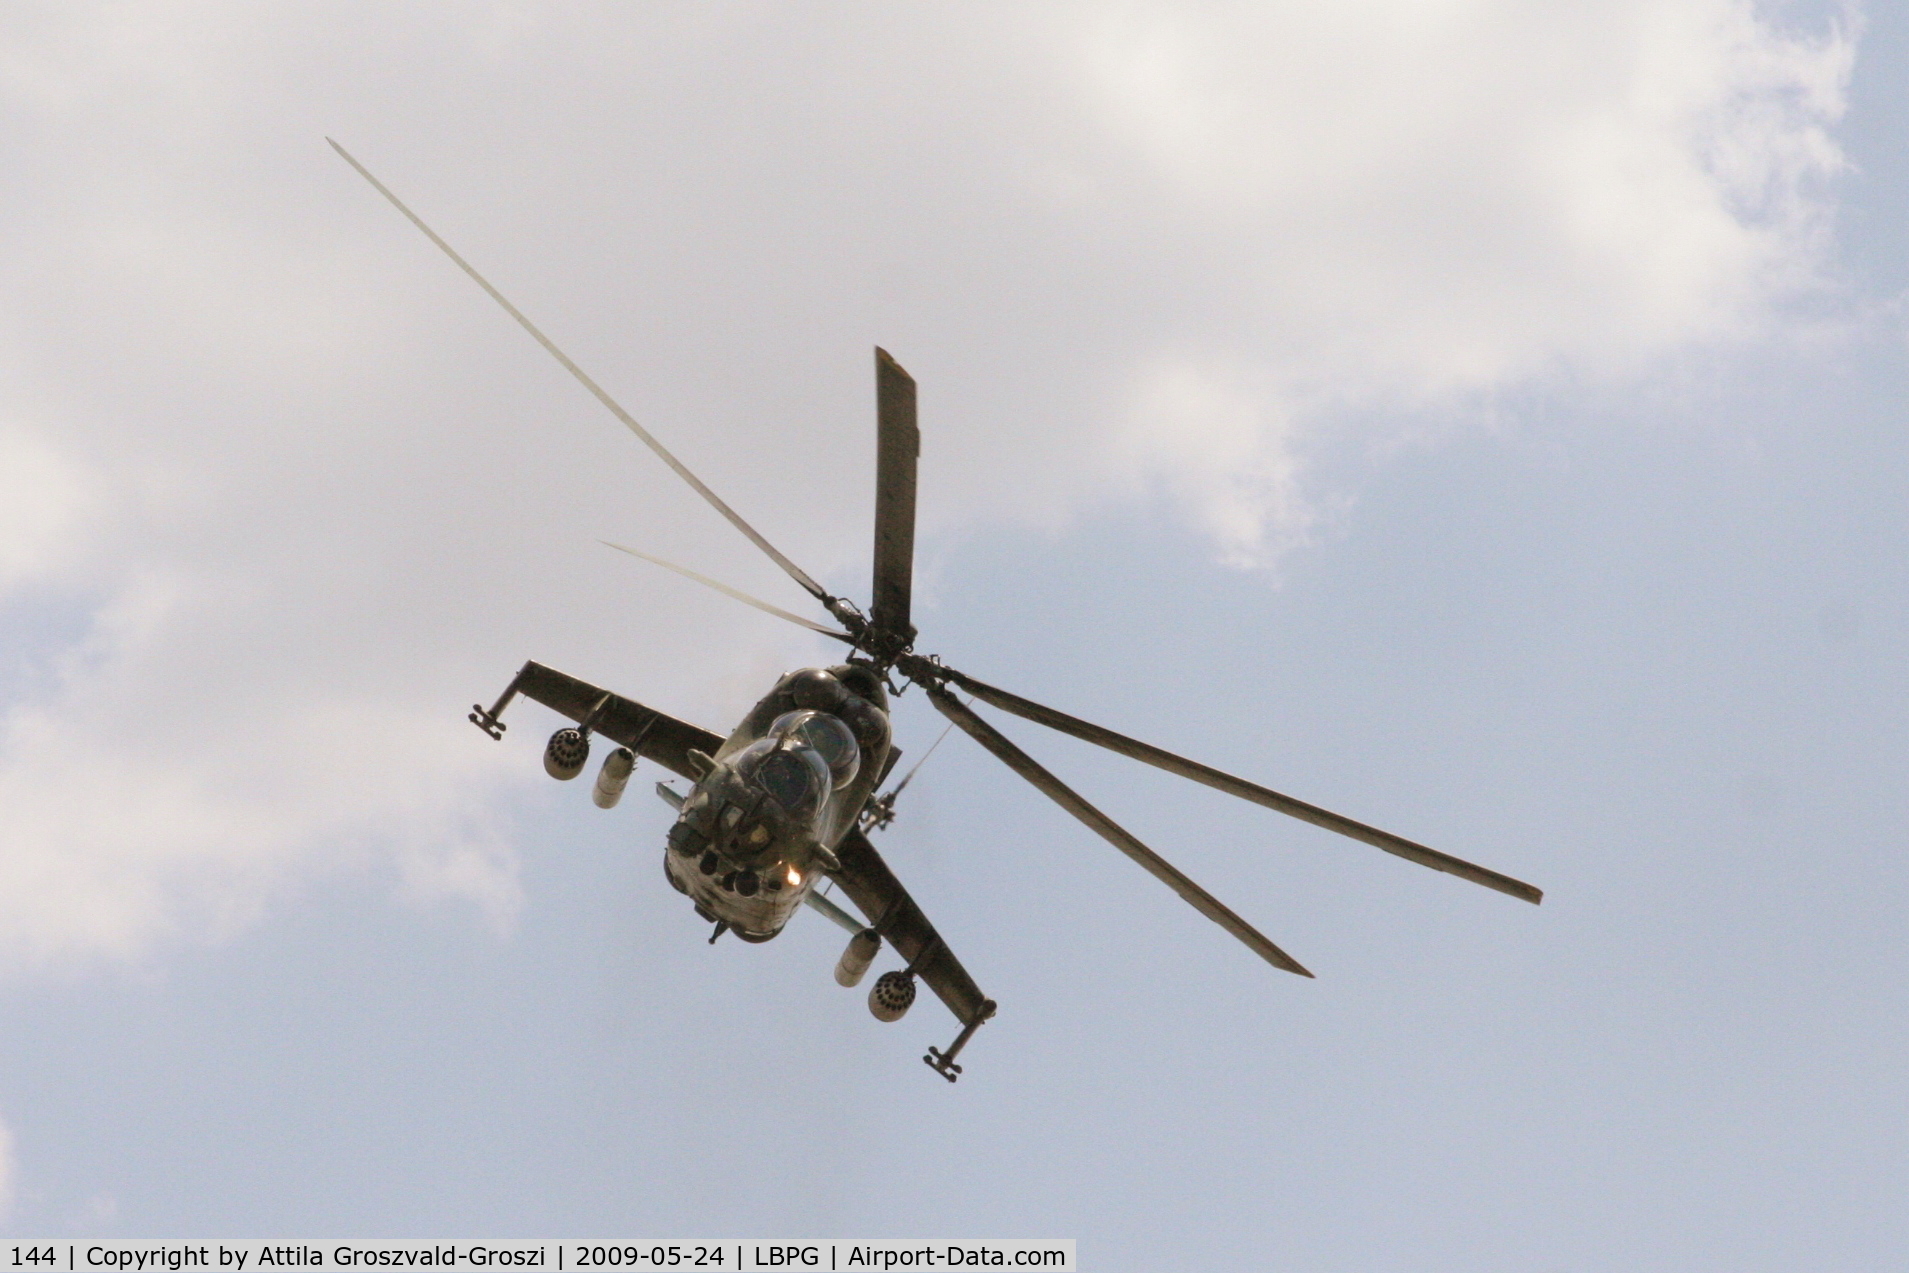 144, 1999 Mil Mi-24V Hind E C/N 150726, BIAF 09 Bulgaria Plovdiv (Krumovo) LBPG Graf Ignatievo Military Air Base